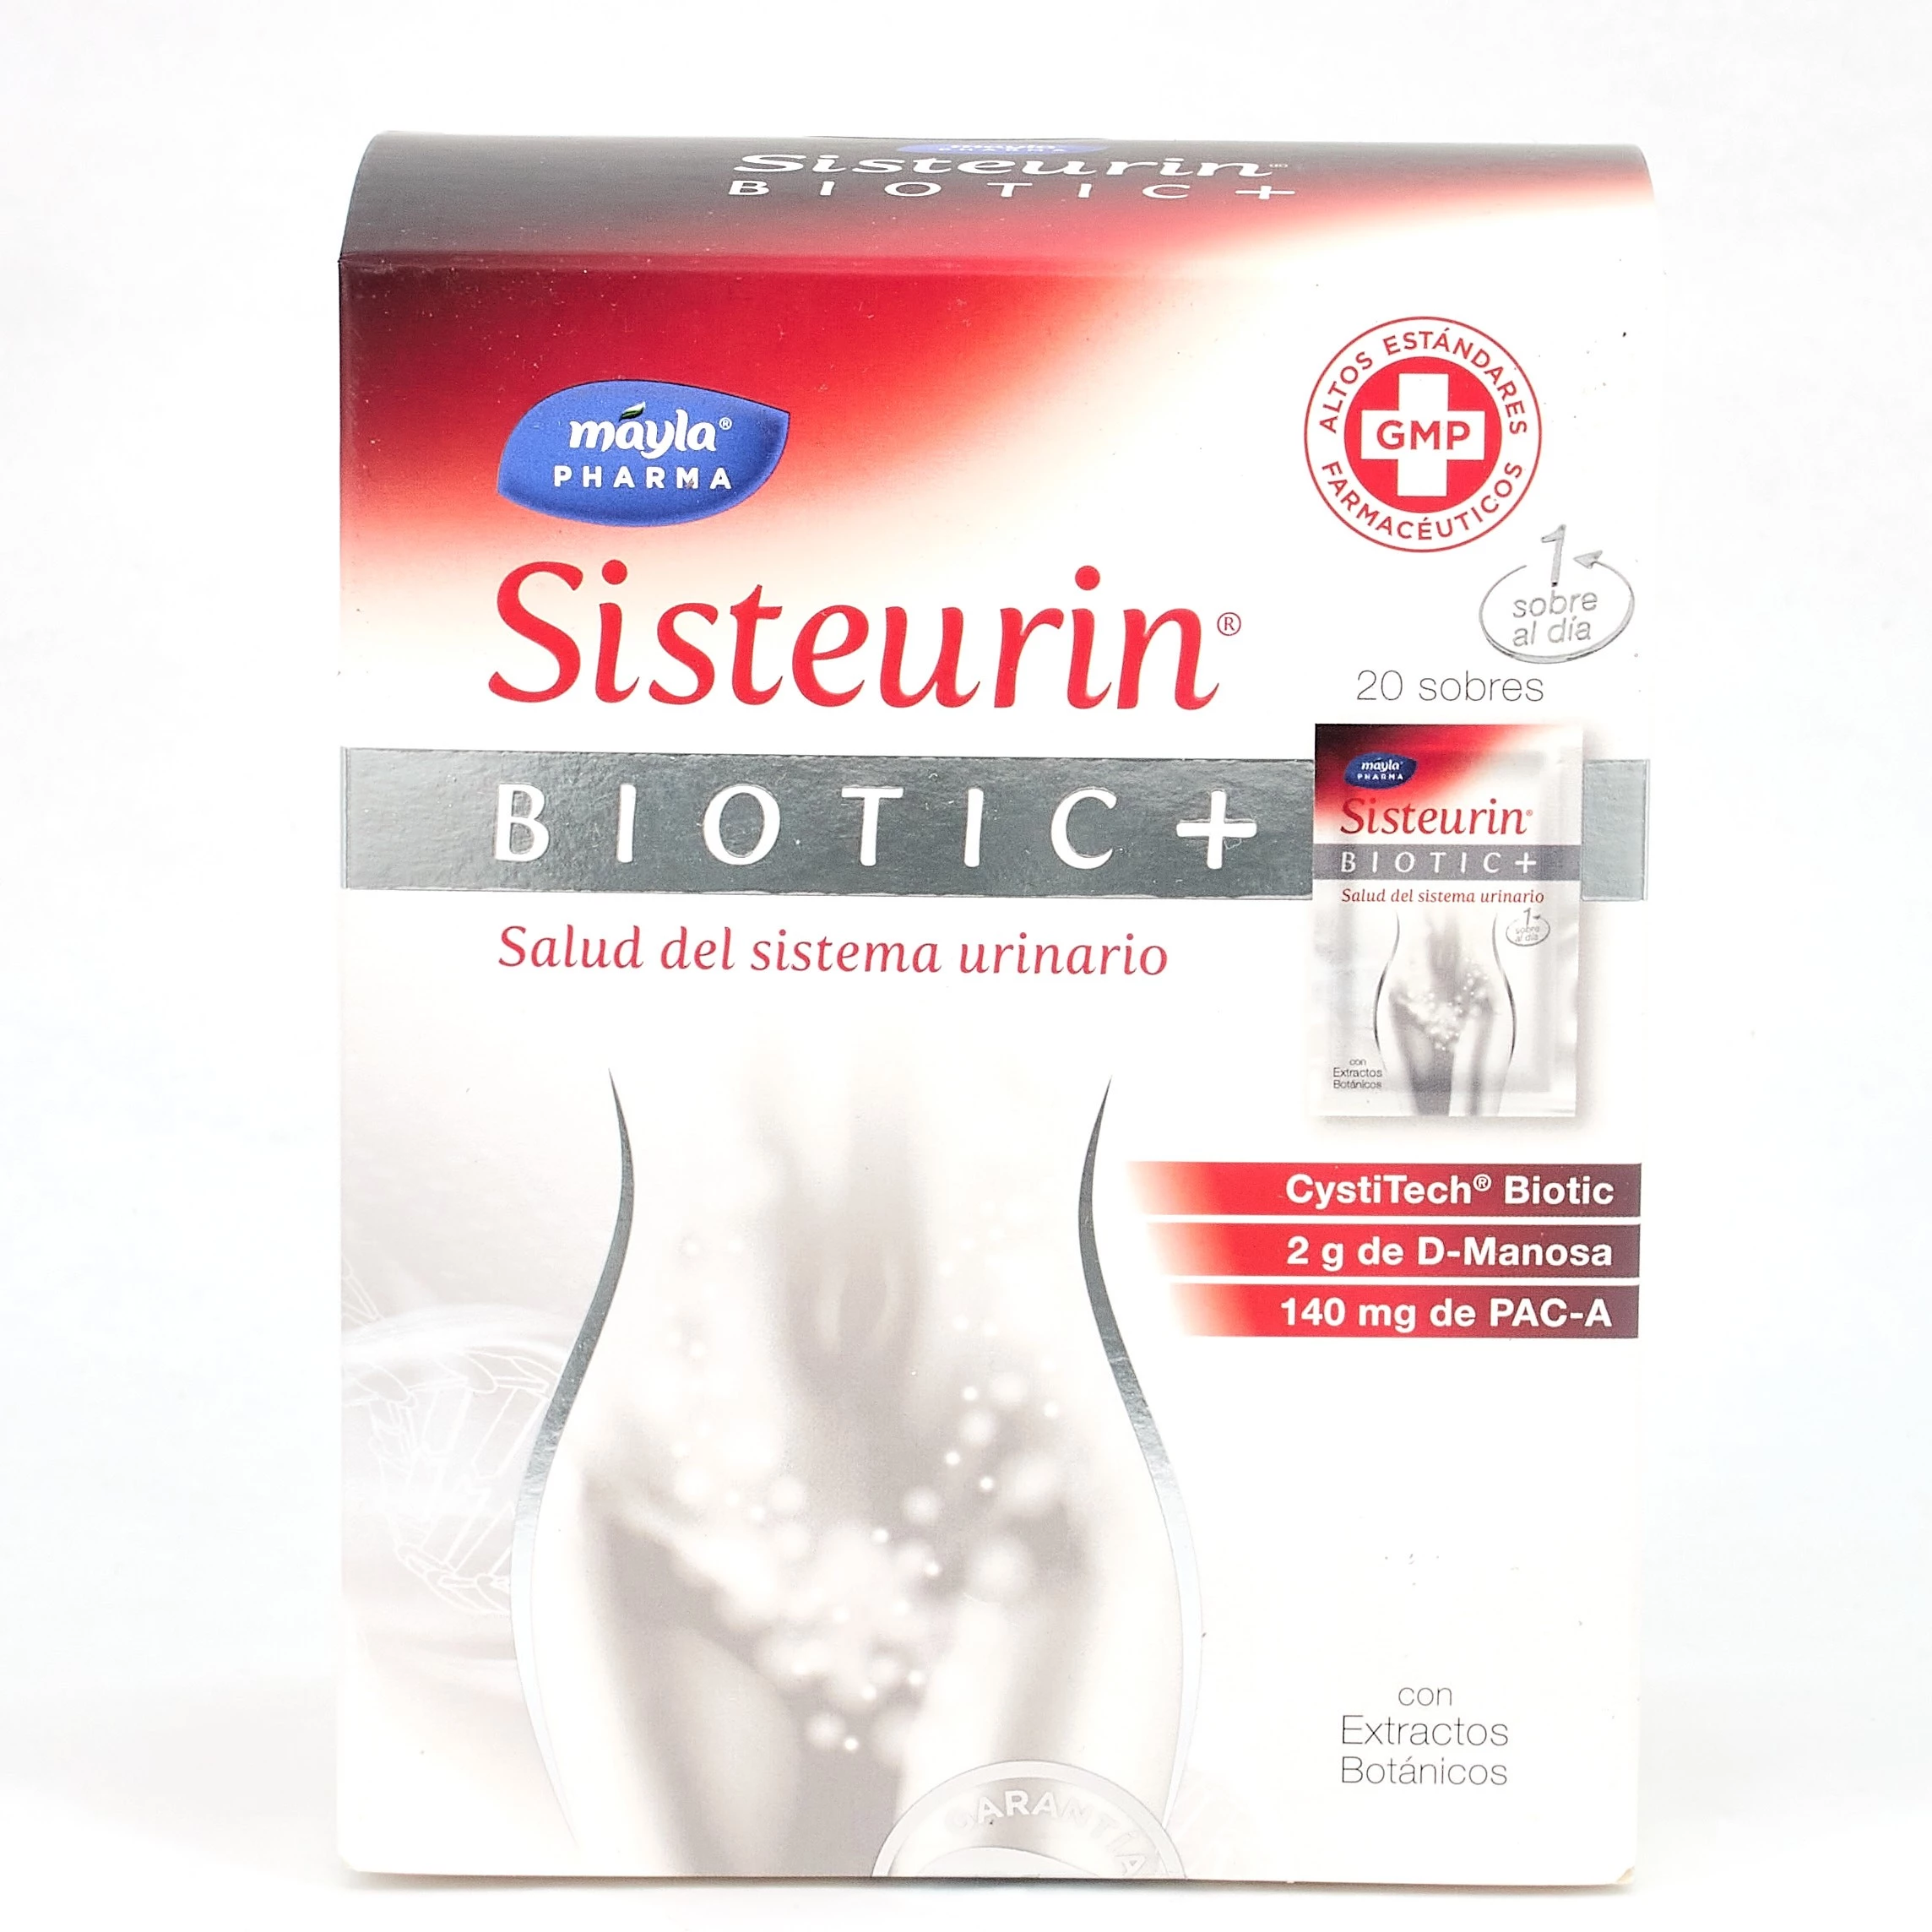 Sisteurin Biotic+, 20 Sobres.